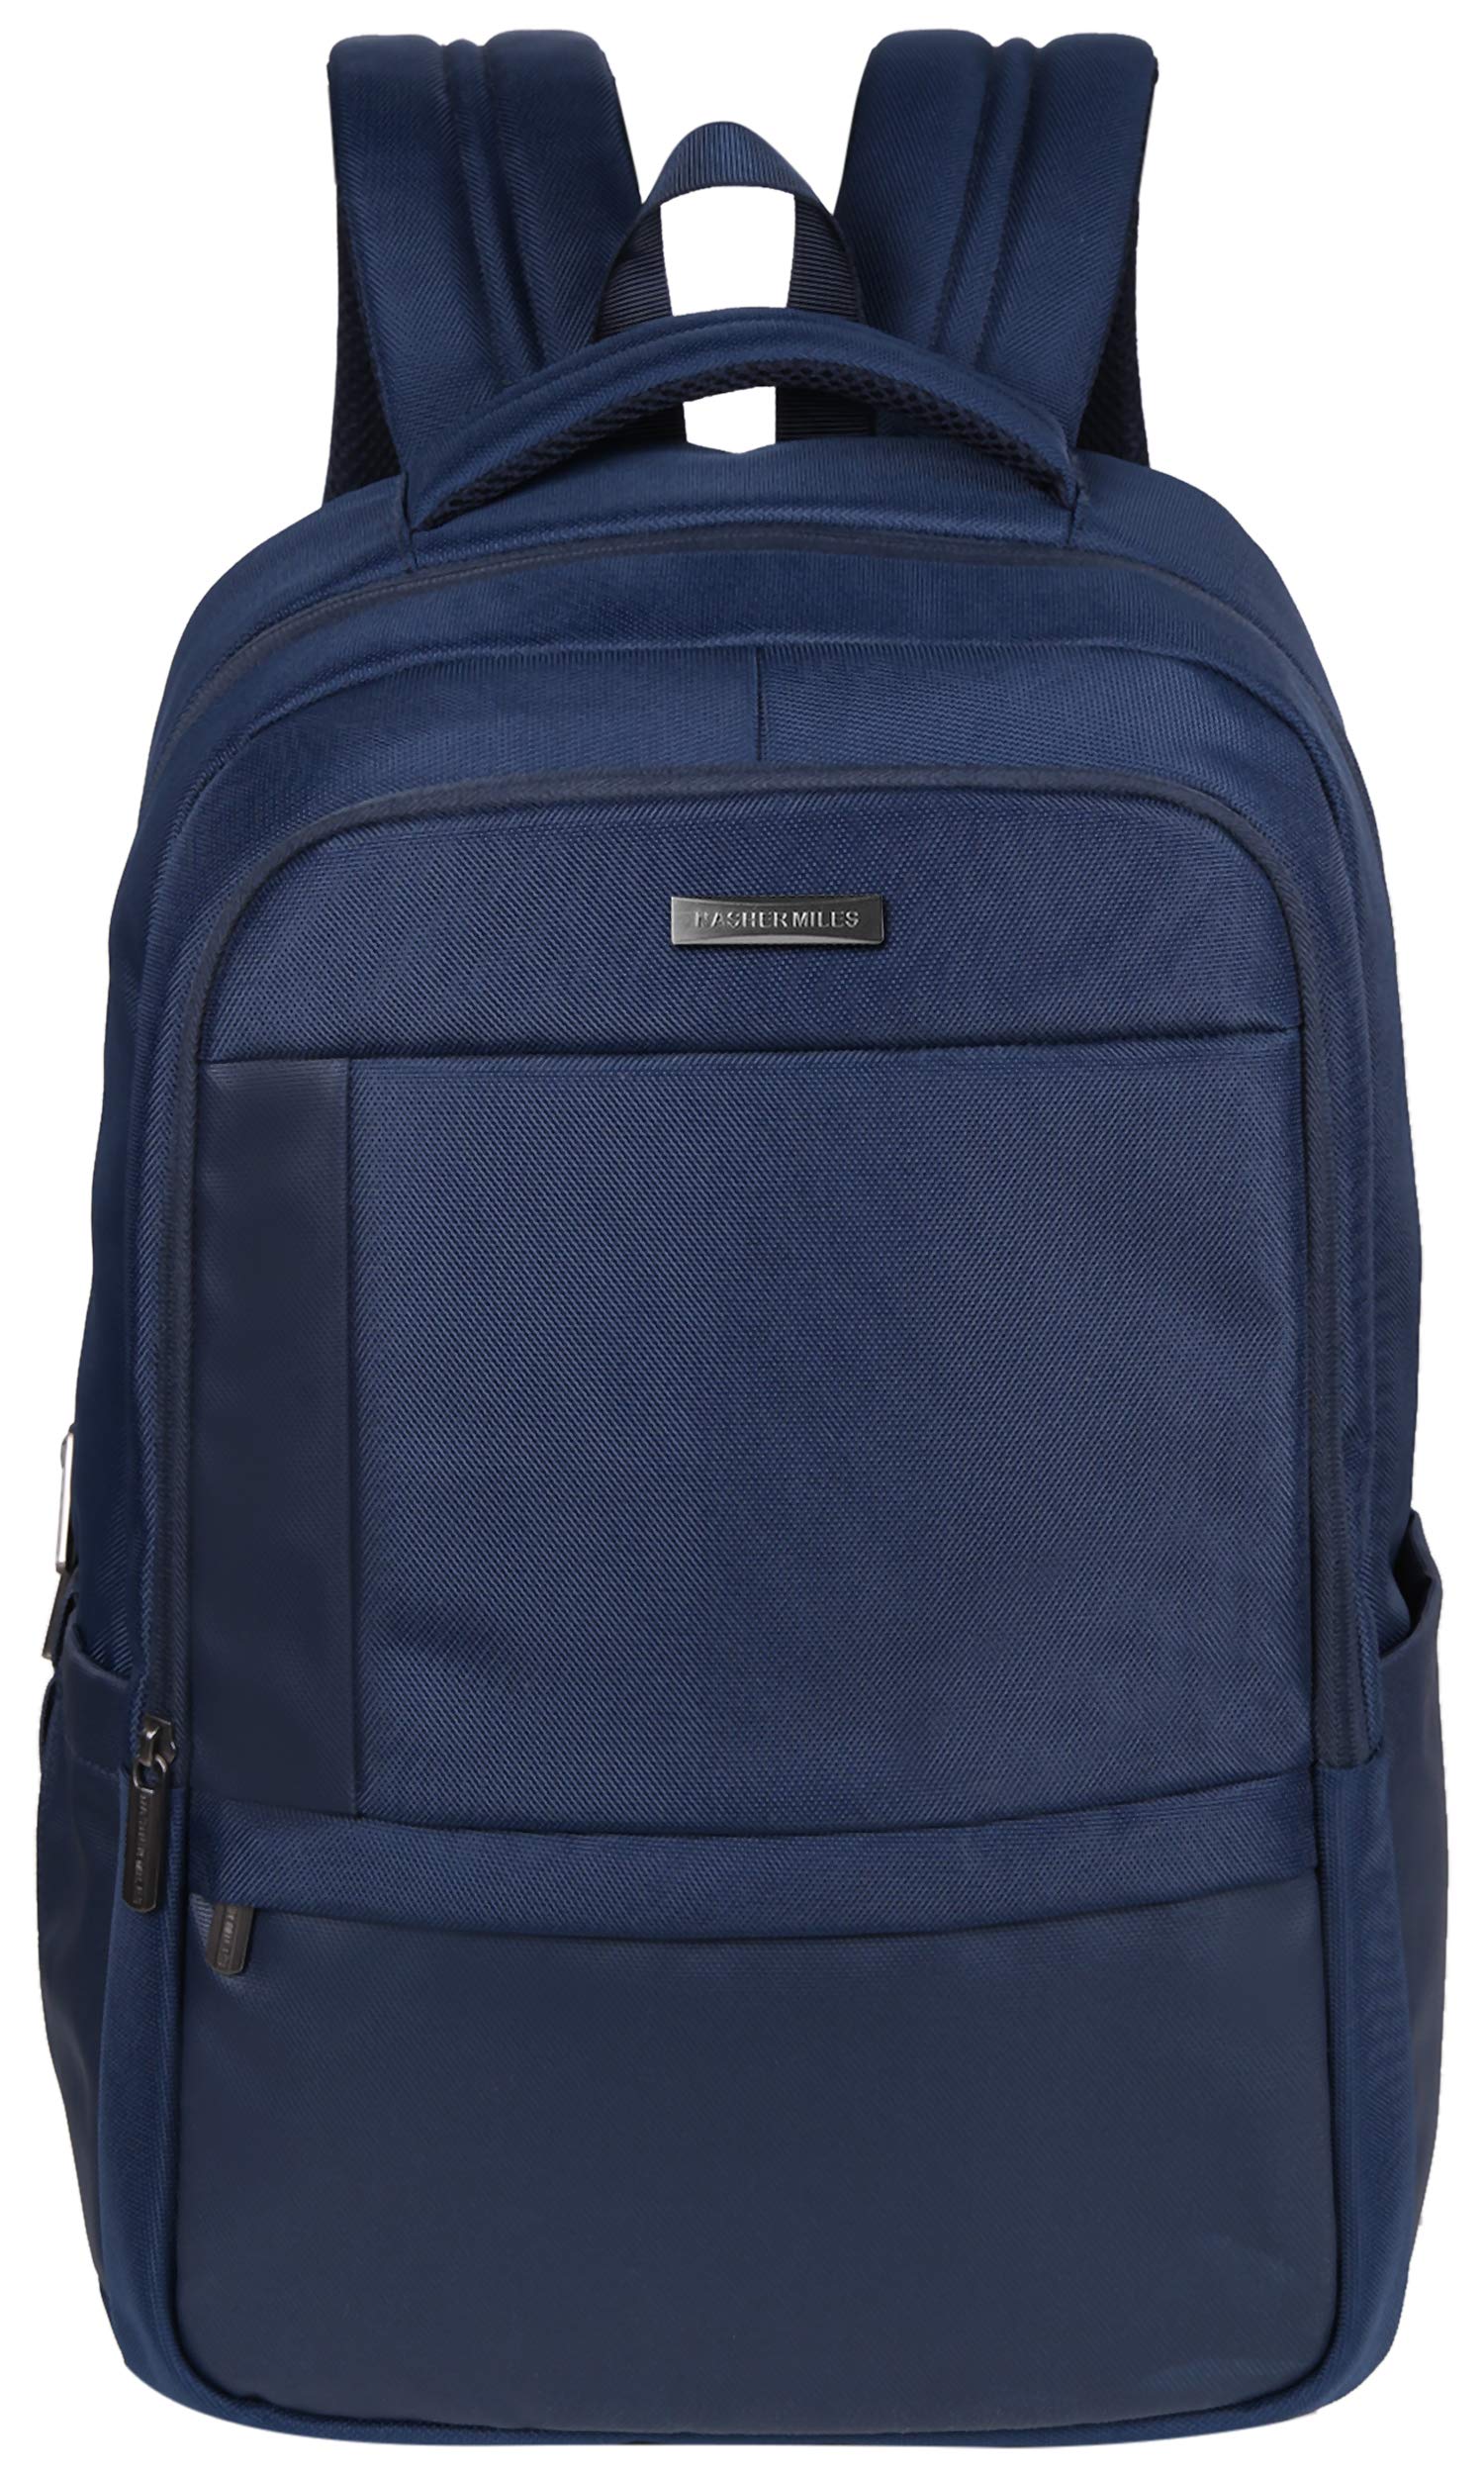 Likoma Corporate Backpack